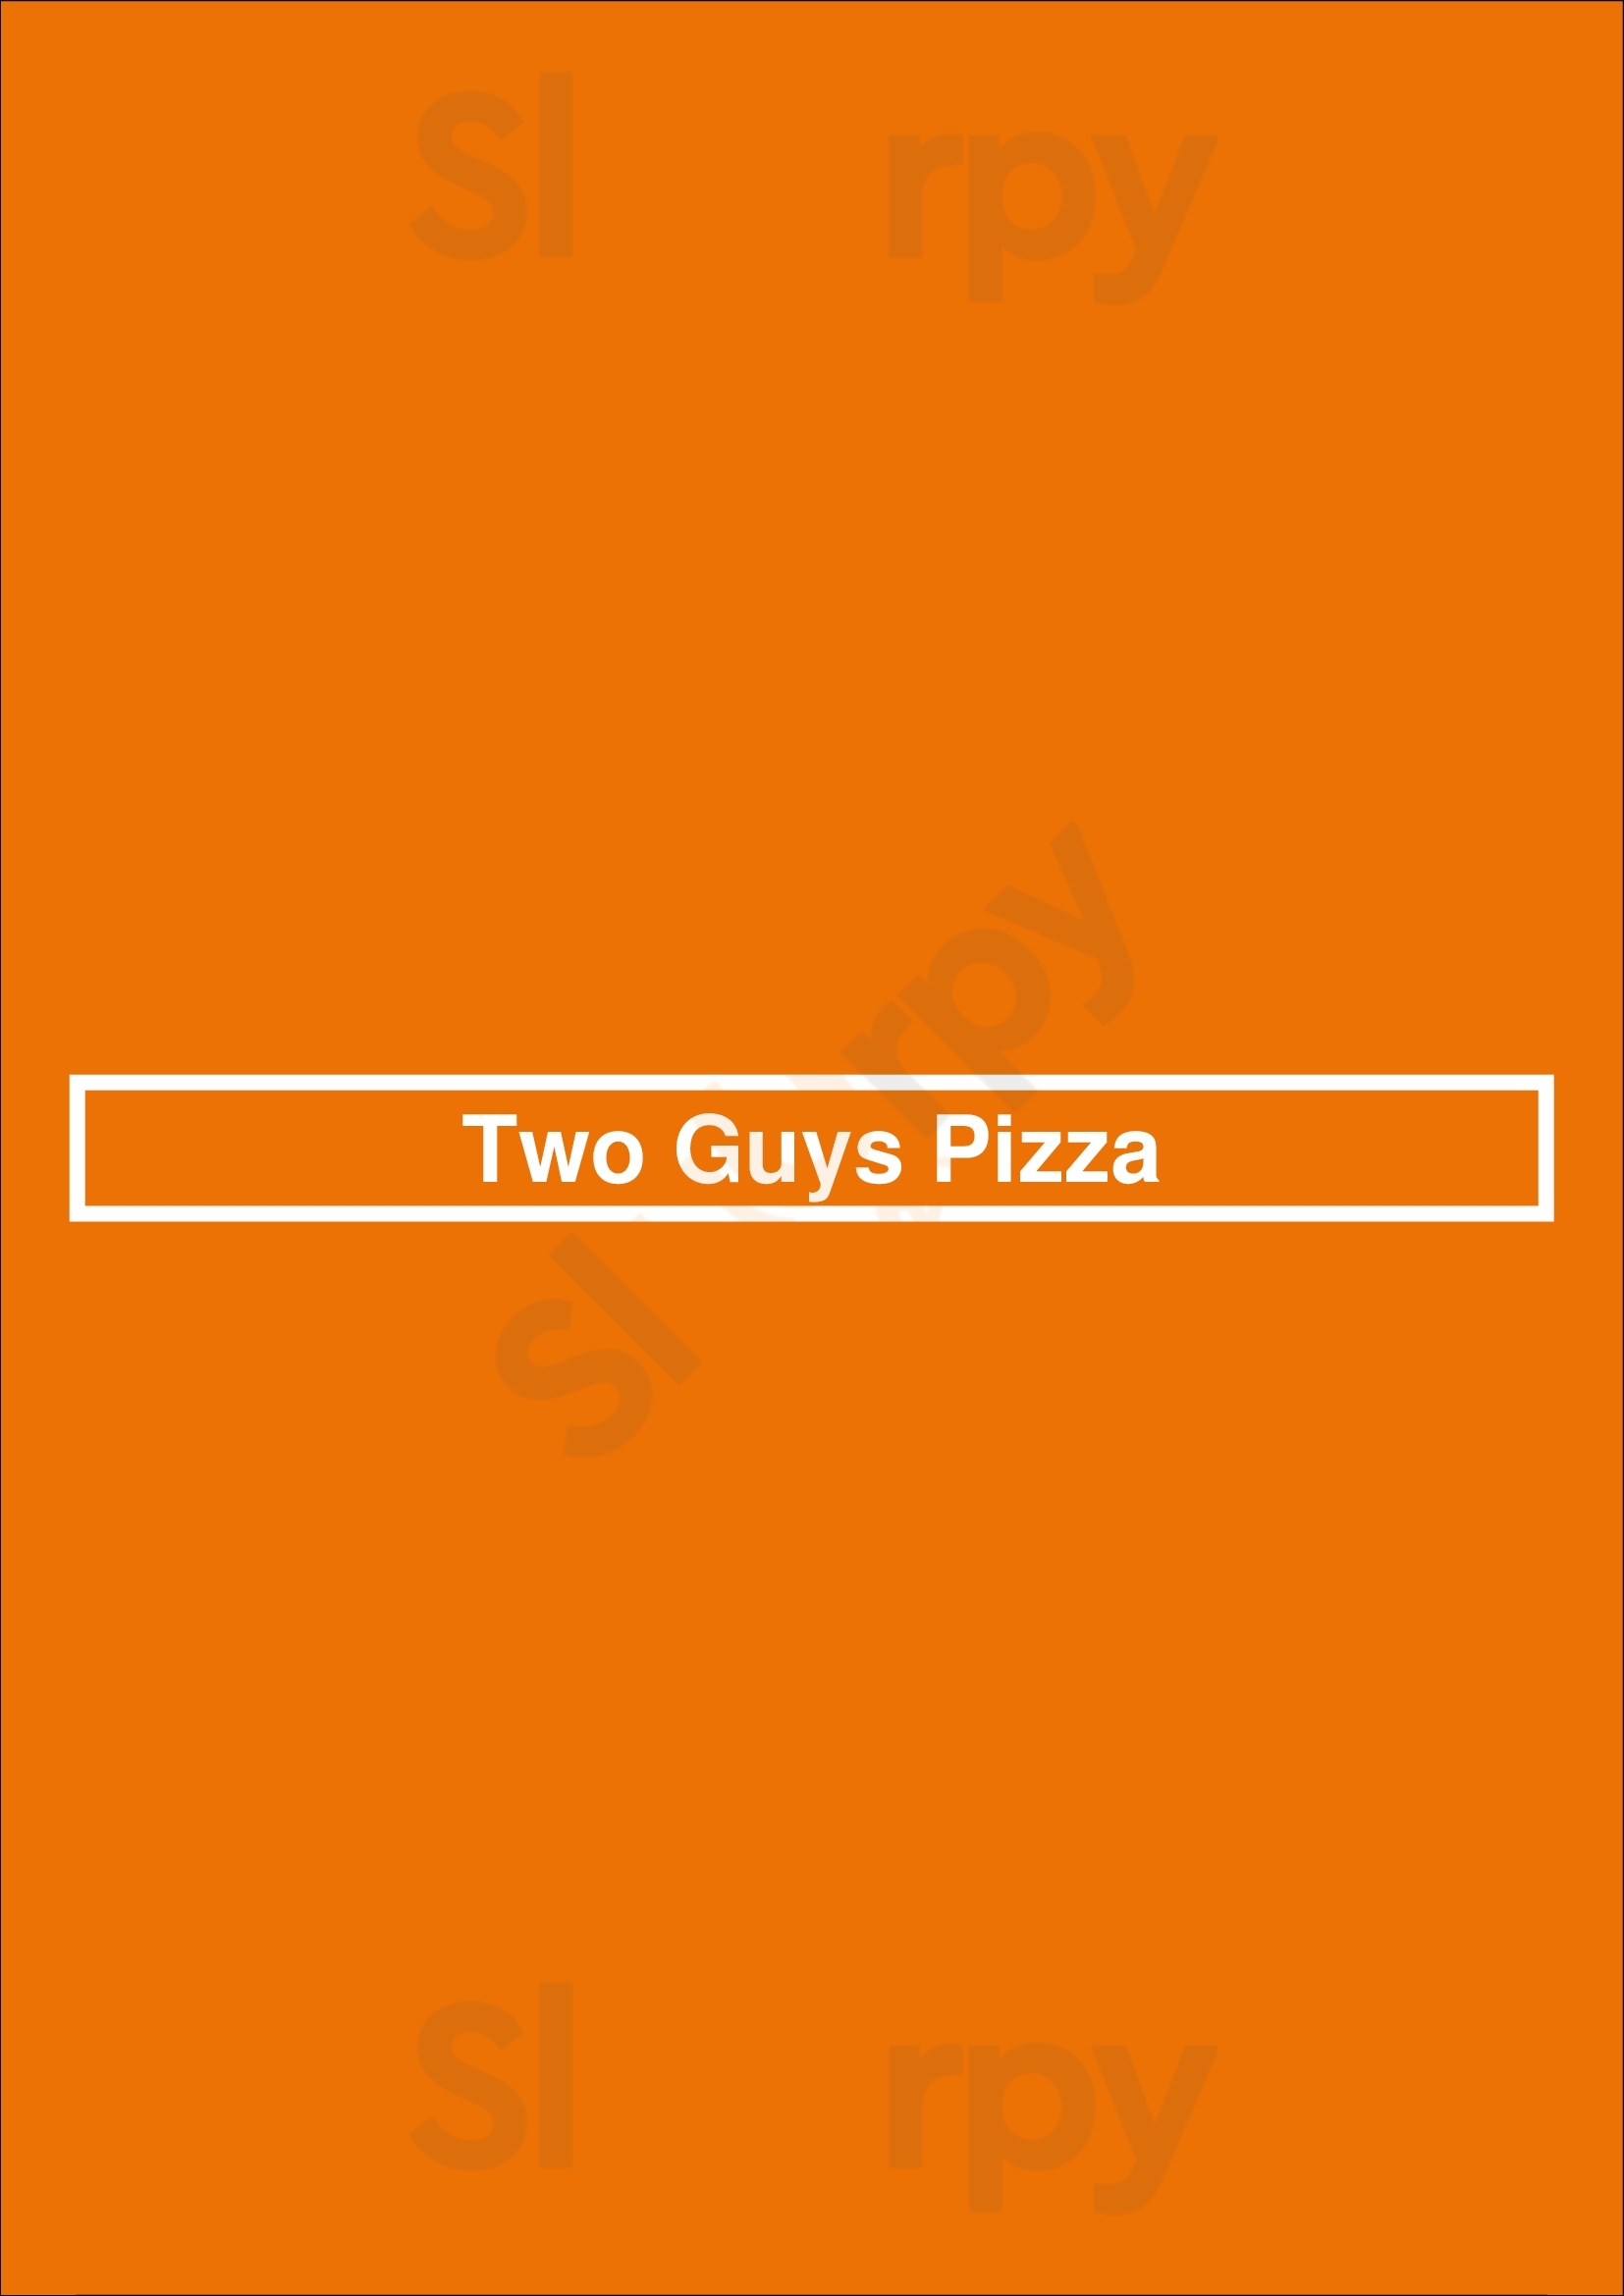 Two Guys Pizza Houston Menu - 1